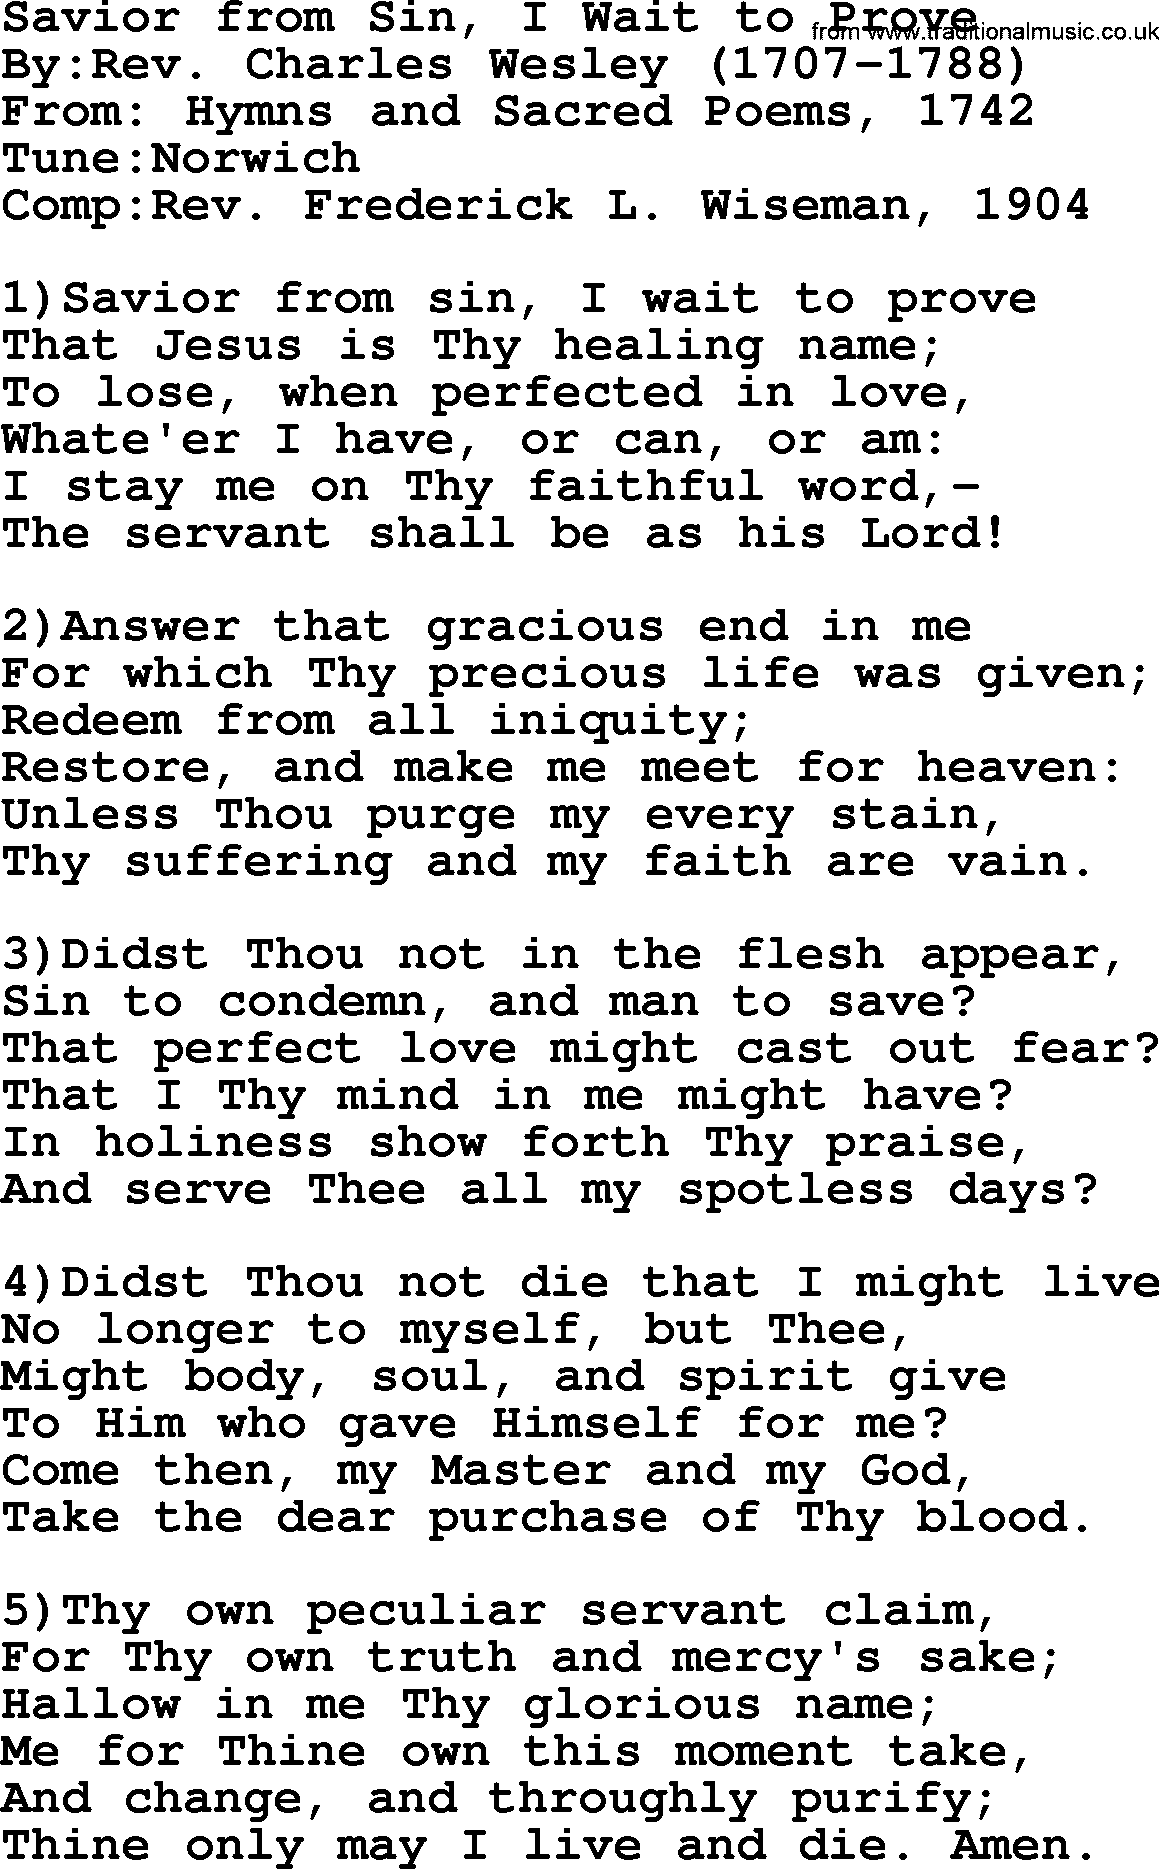 Methodist Hymn: Savior From Sin, I Wait To Prove, lyrics